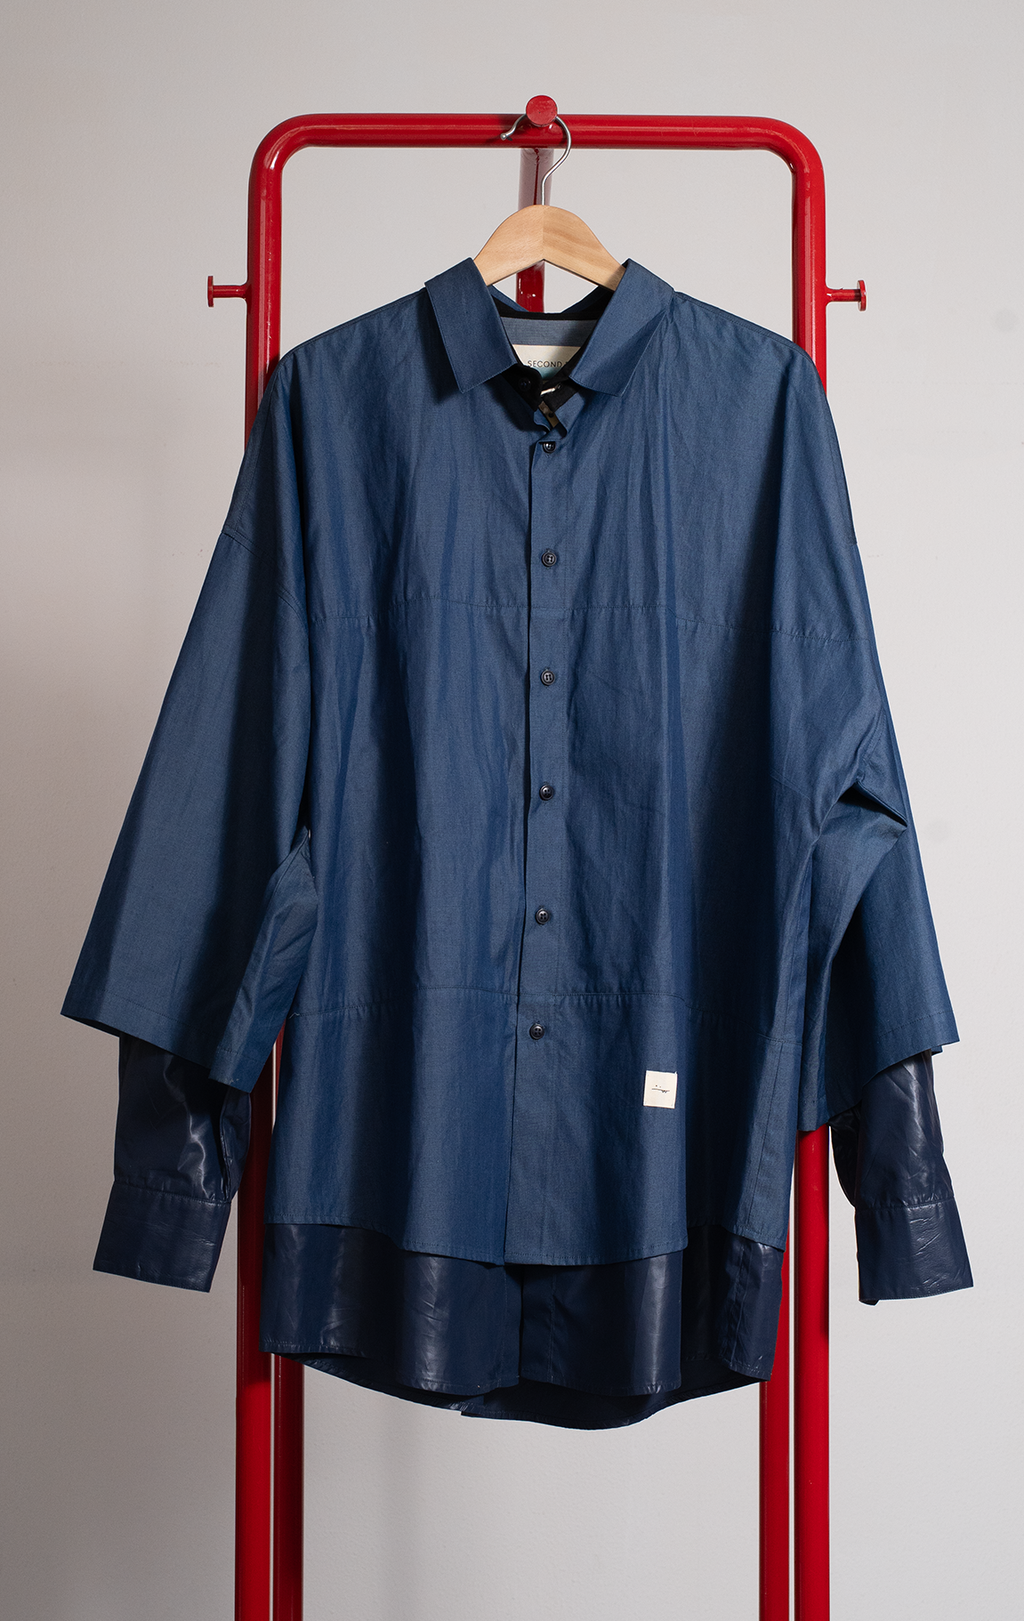 SECOND ST DRESS - Denim & polyester navy - Medium